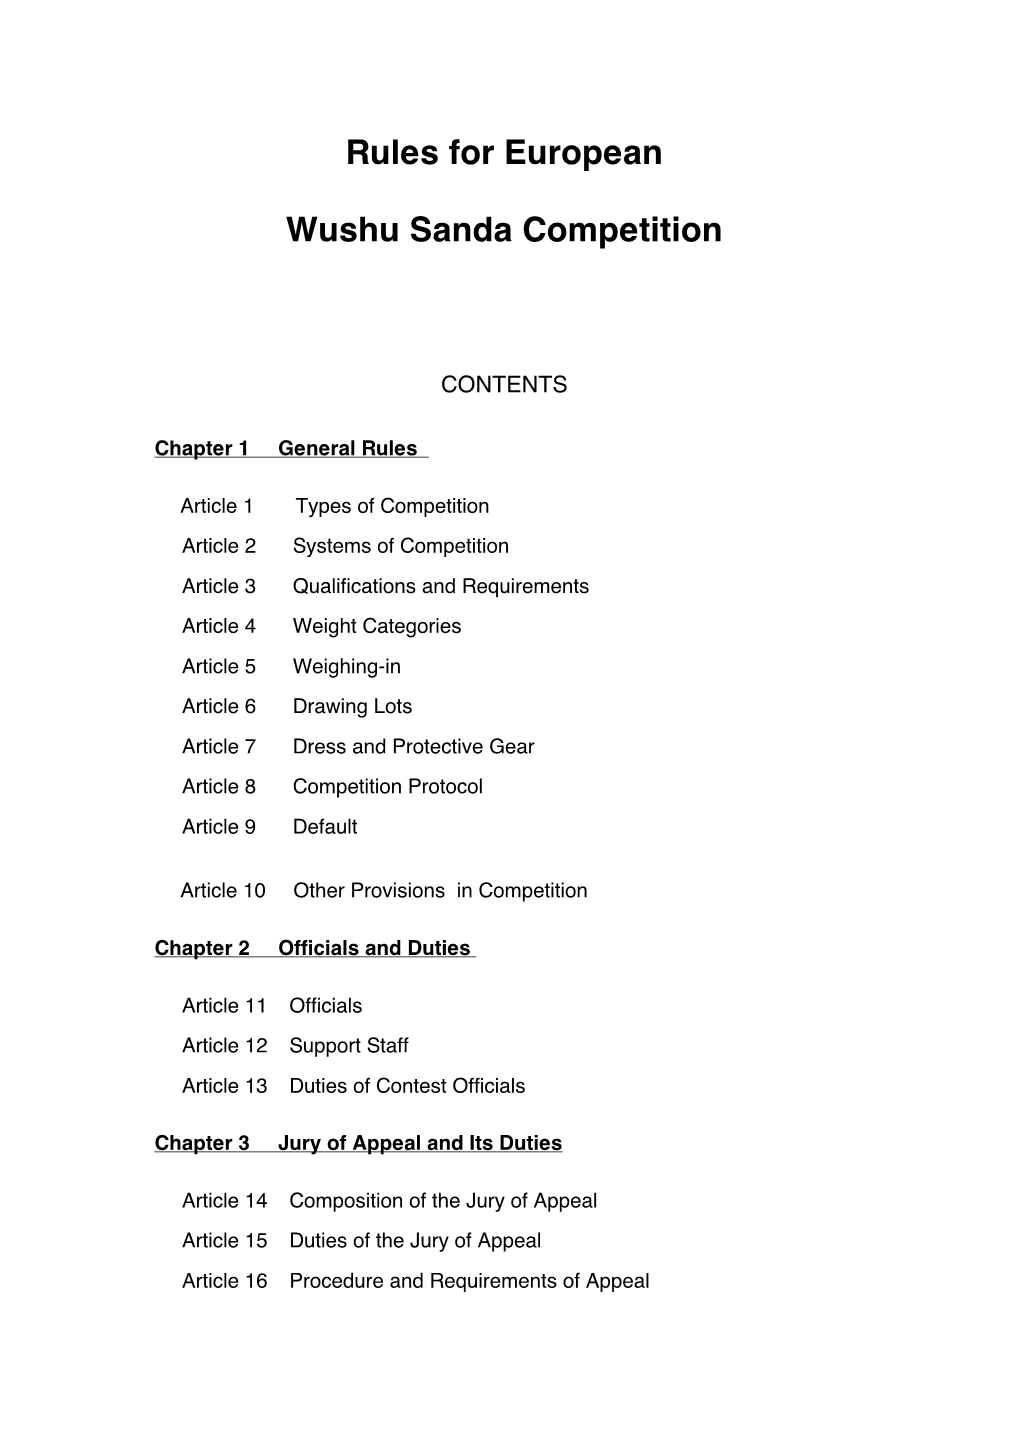 Rules for European Wushu Sanda Competition